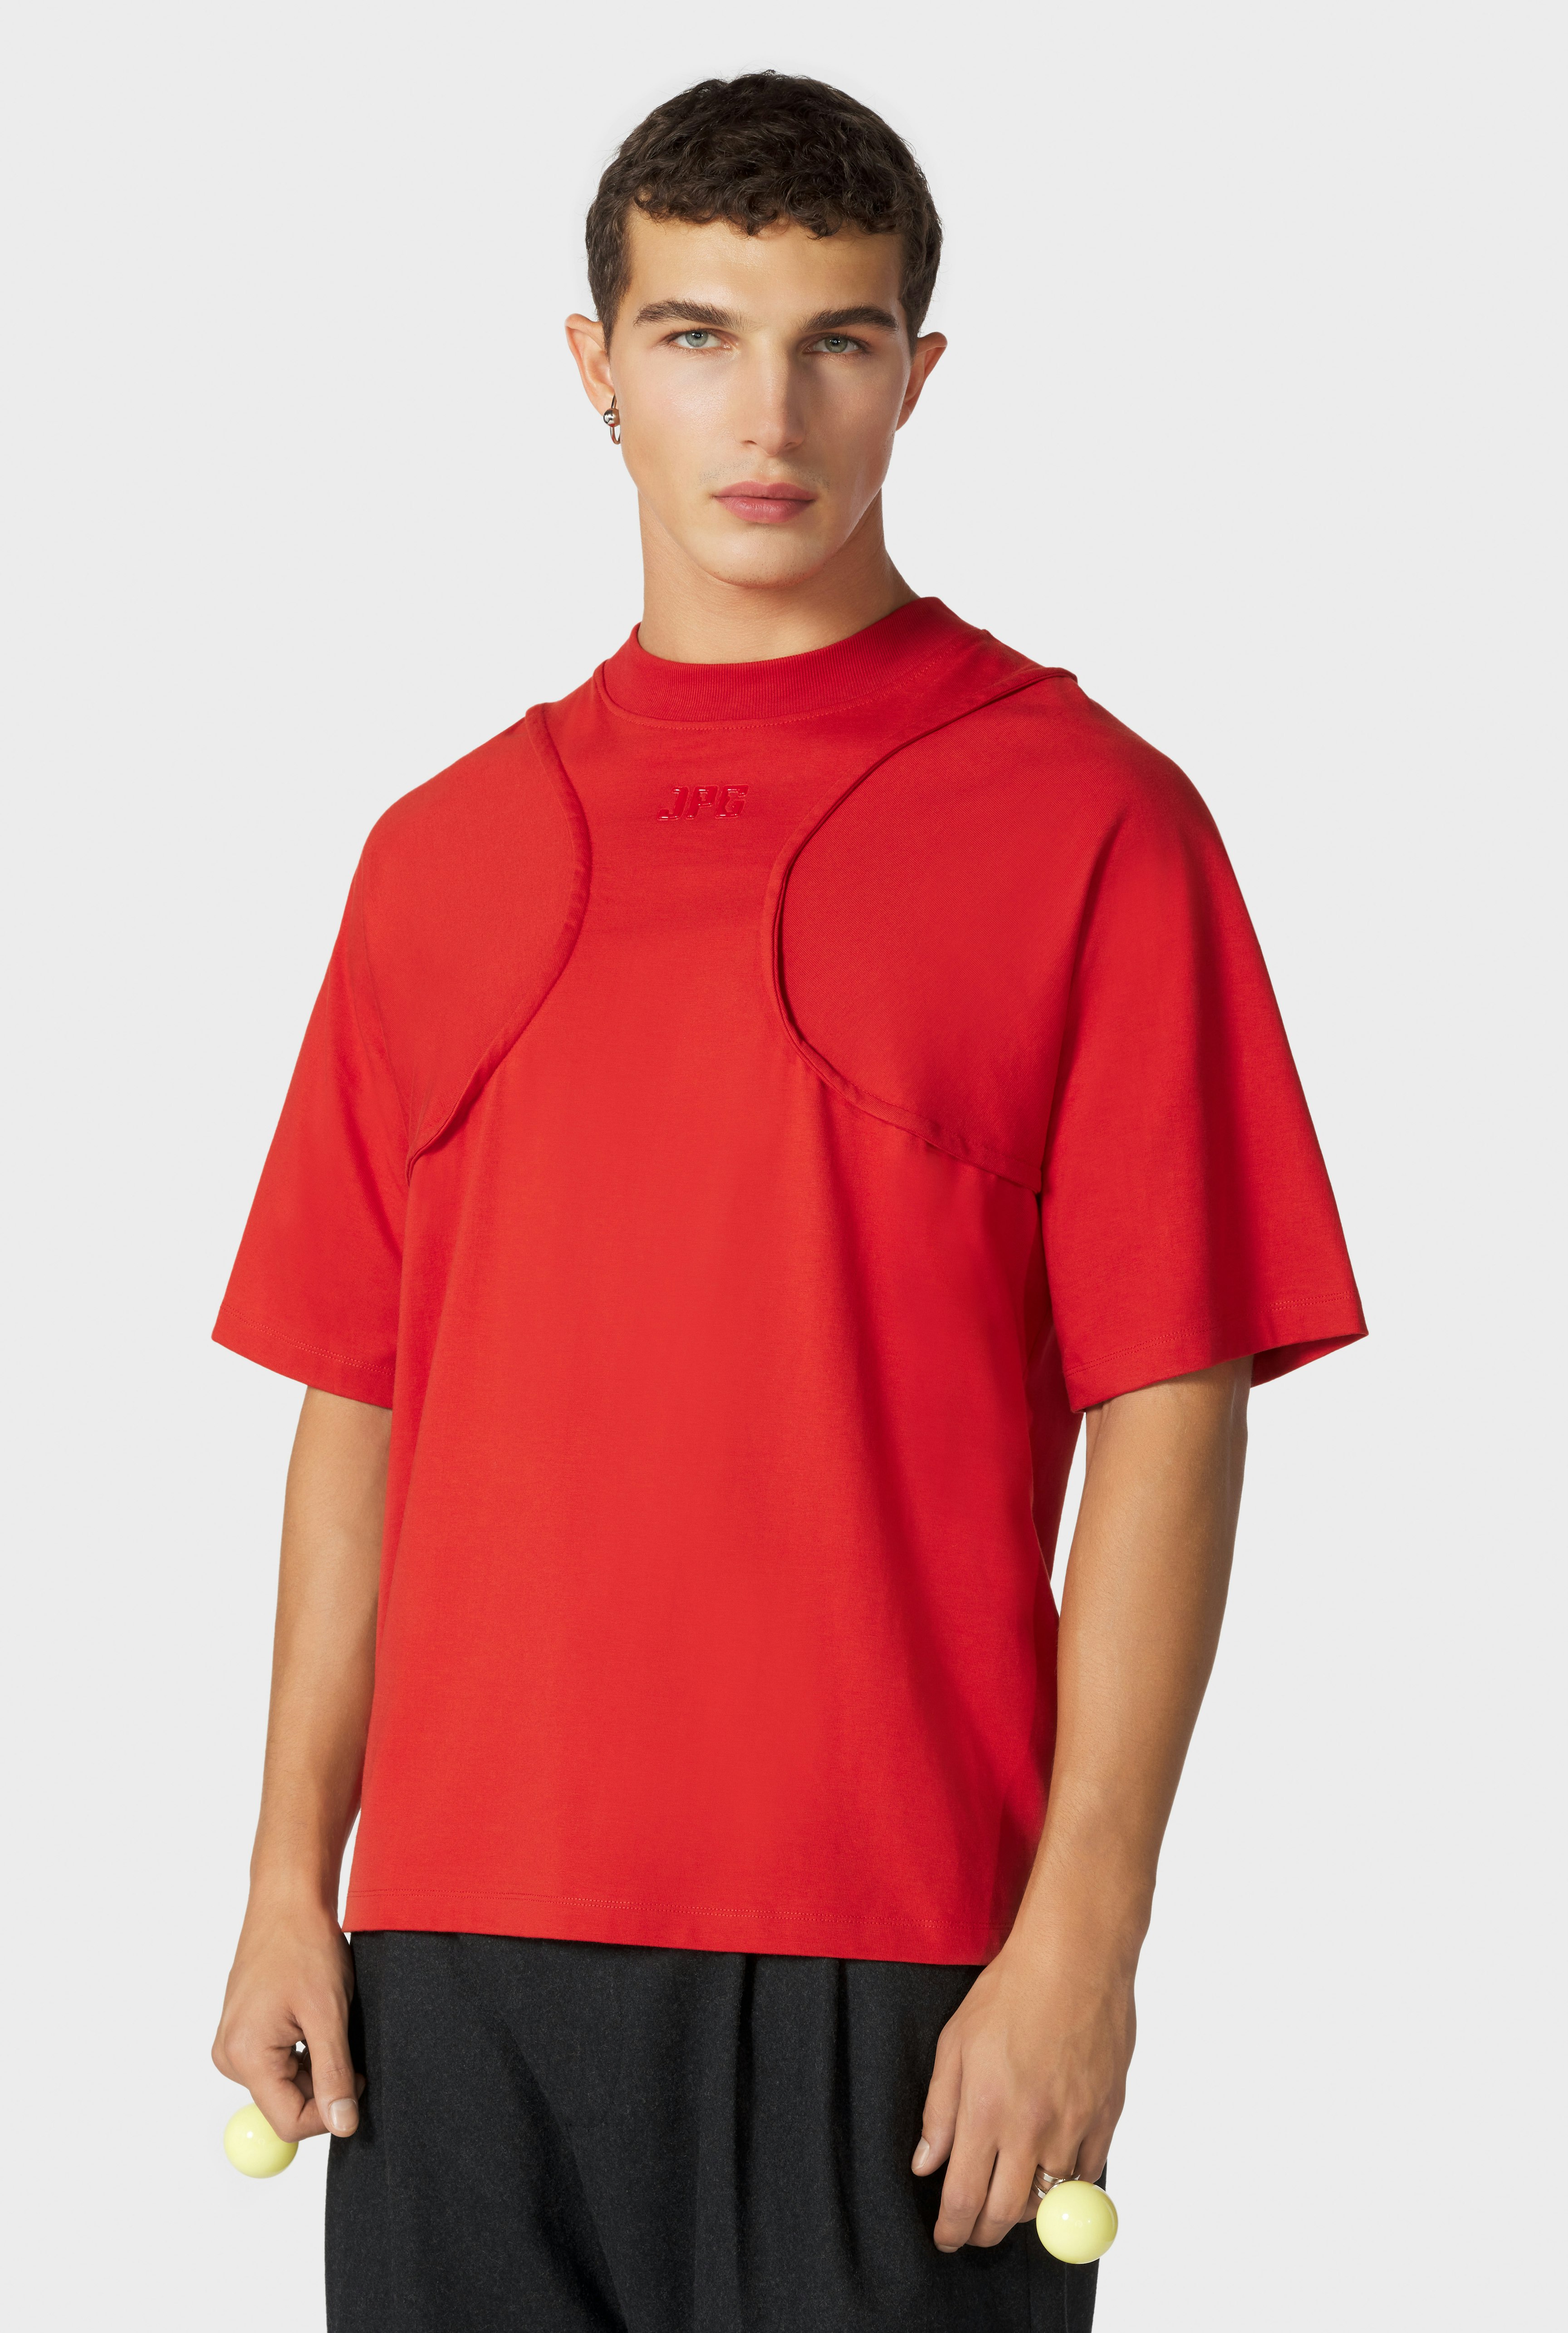 The Red JPG T-Shirt